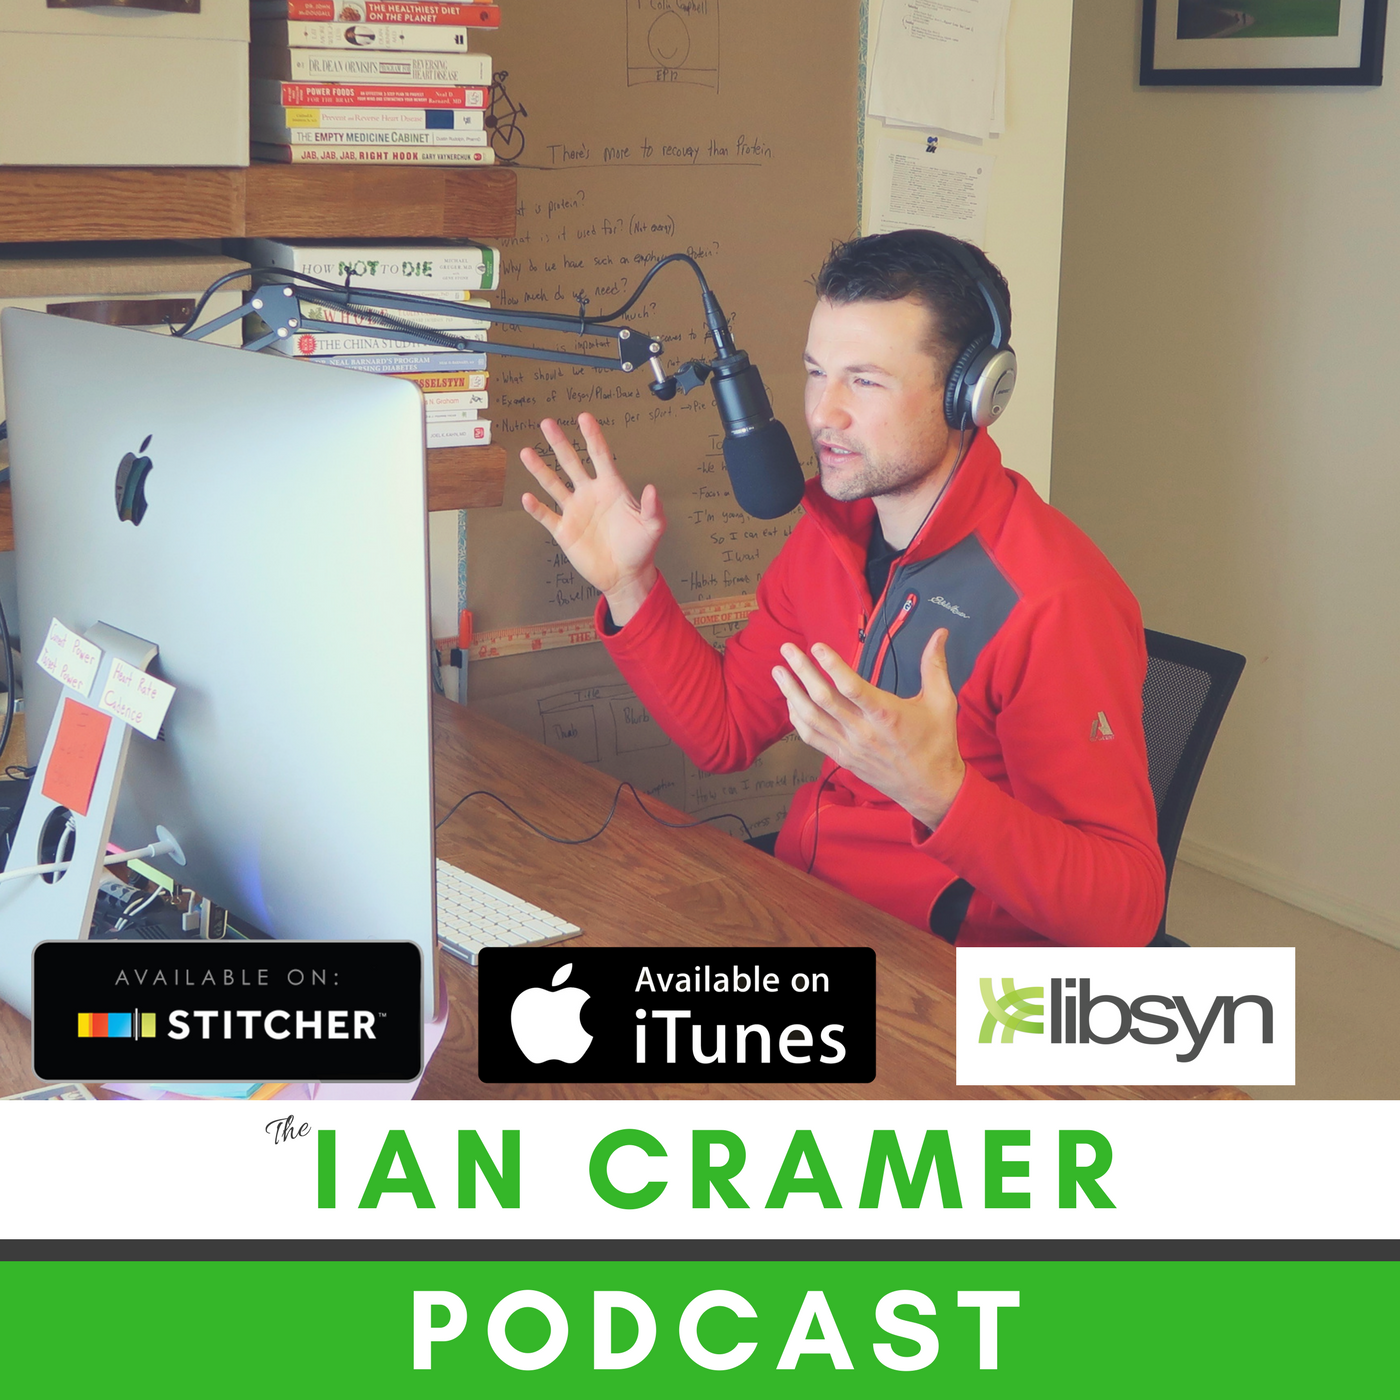 Stephan Speaks on His Upcoming Debate on Joe Rogan's Podcast with Gary Taubes